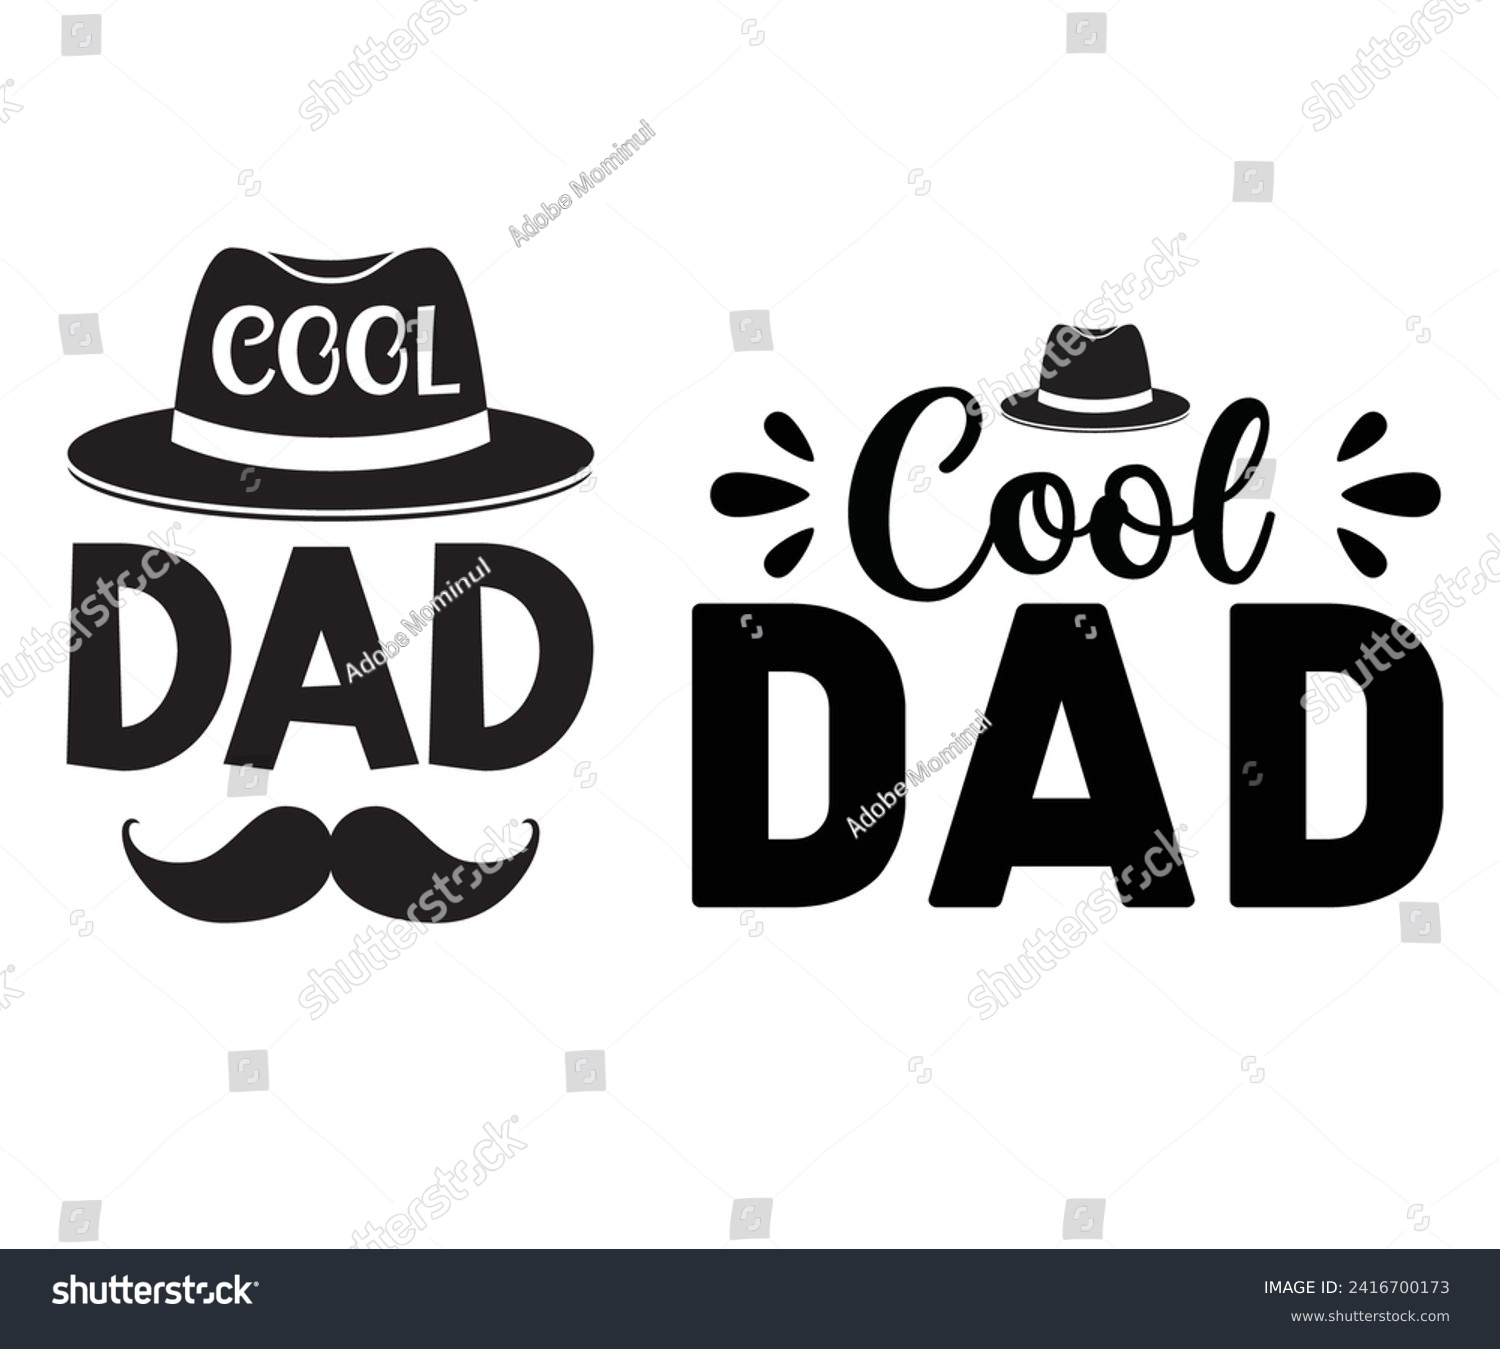 SVG of Cool Dad Bundle Svg,Father's Day Svg,Papa svg,Grandpa Svg,Father's Day Saying Qoutes,Dad Svg,Funny Father,Gift For Dad Svg,Daddy Svg,Family Svg,T shirt Design,Svg Cut File,Typography svg